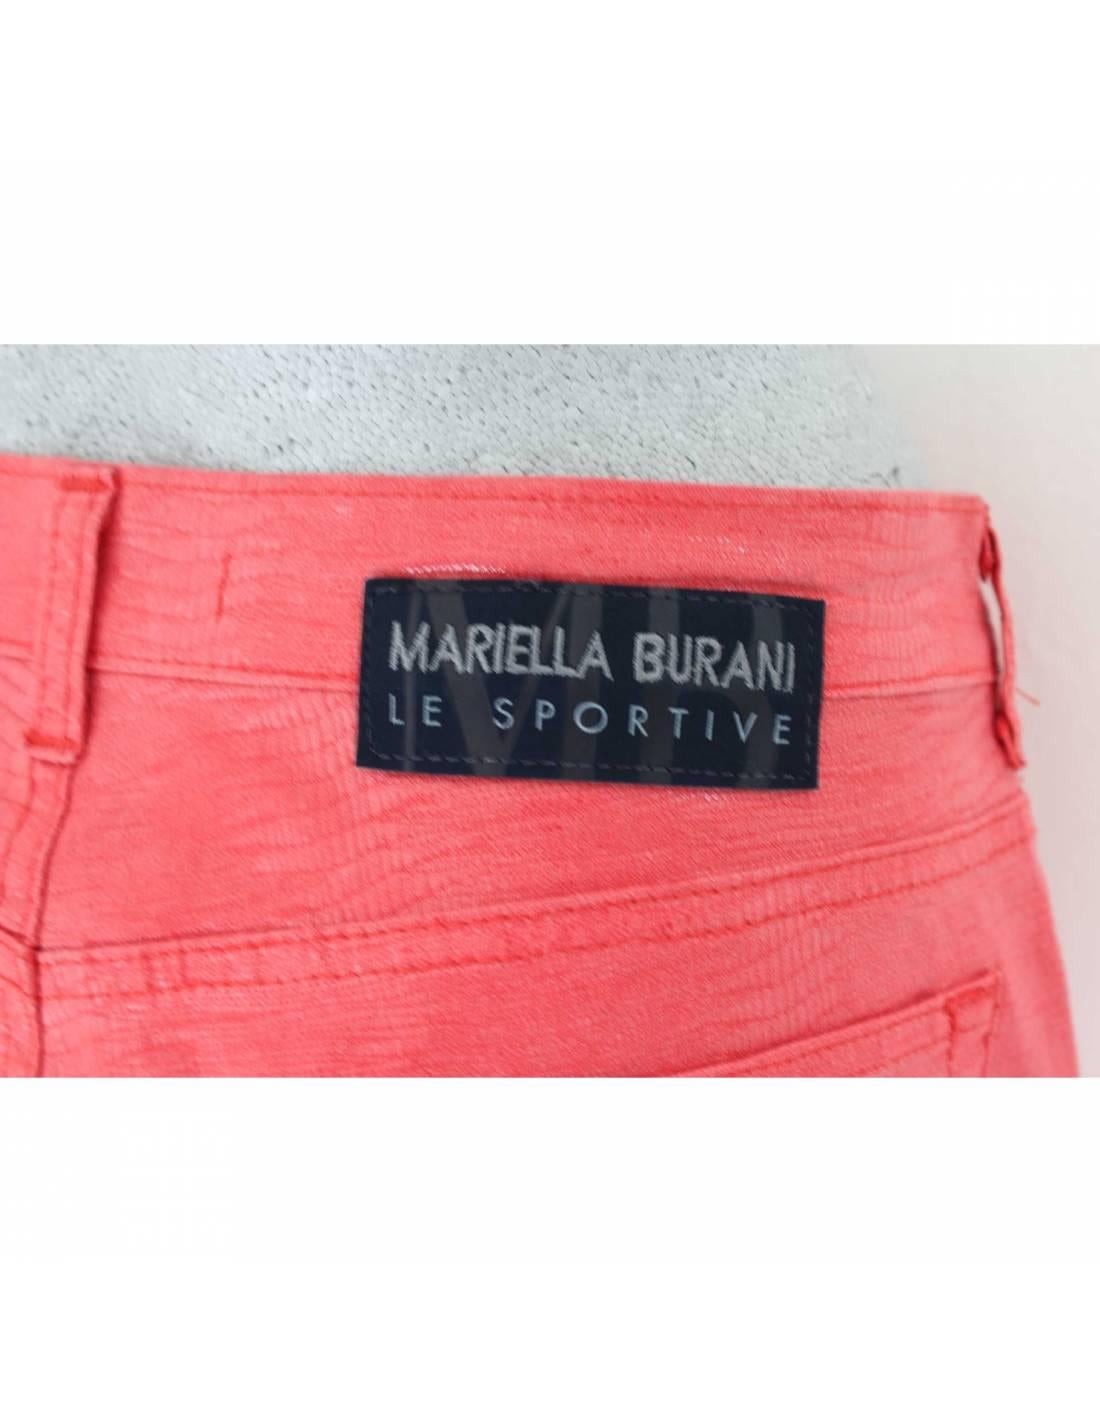 Mariella Burani Pink Cotton Waxed Flared Pants 1